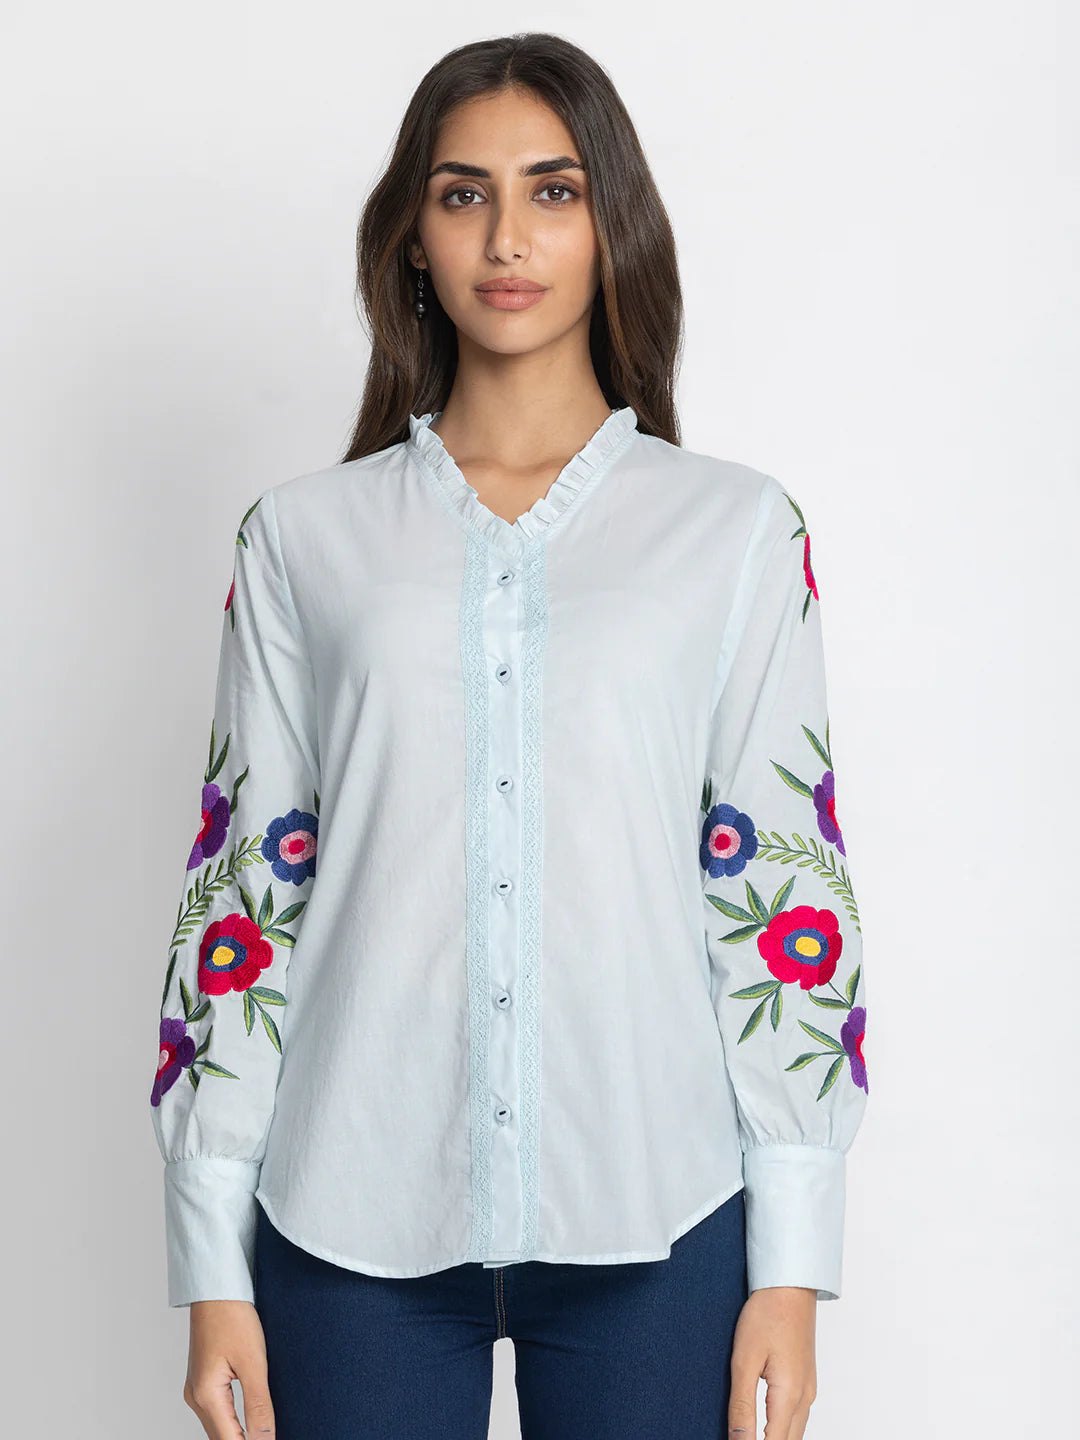 Blue Button-Down Shirt for Women | Whimsical Blue Embroidered Buttondown Shirt